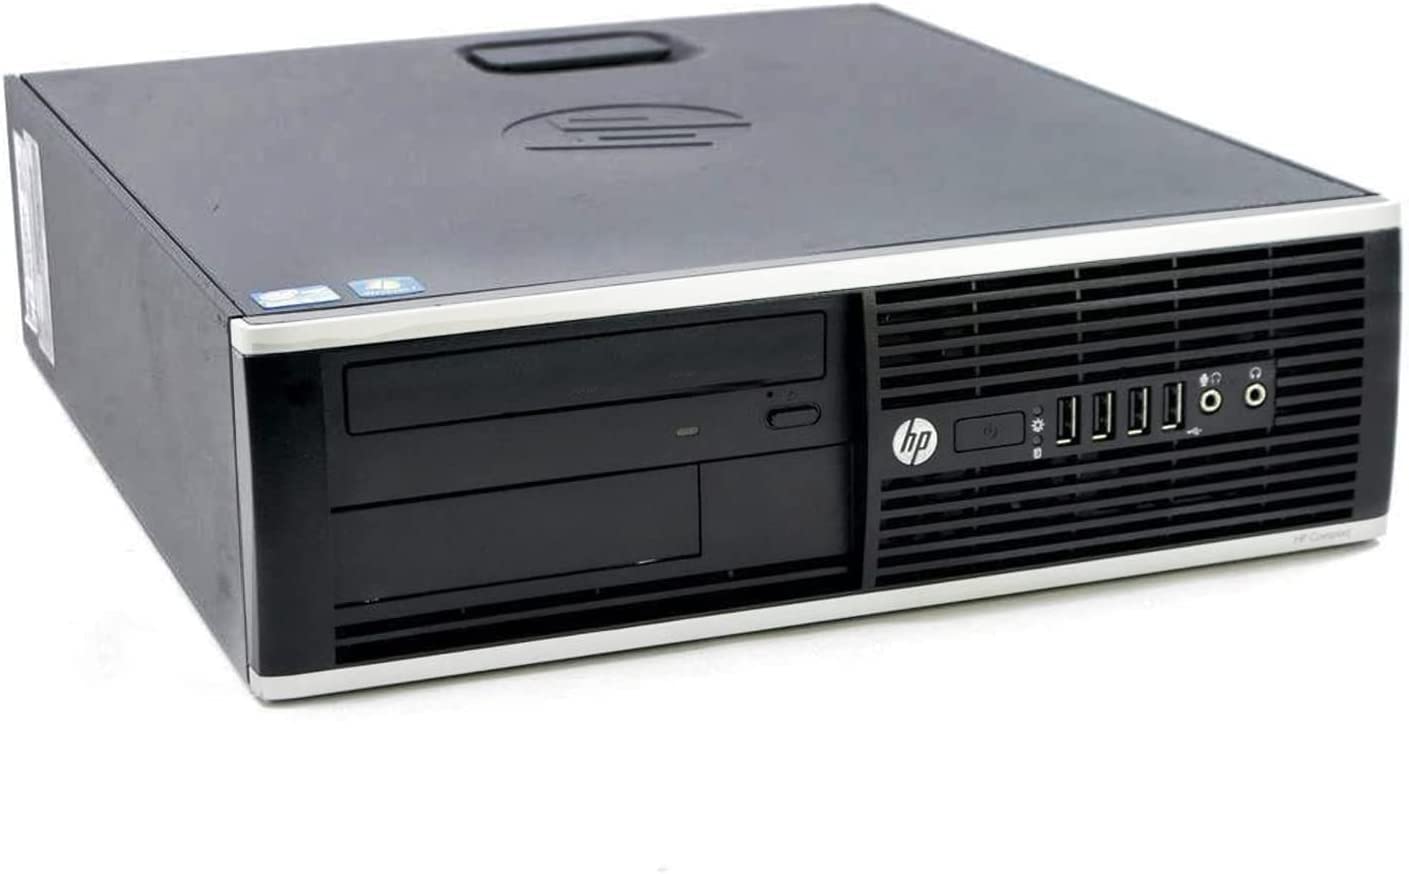 HP Elite Desktop Computer PC, 3.1 GHz, Intel Core i5, 16GB, RAM, 1TB HDD, New 22 inch LED Monitor, RGB Speaker and Keyboard Mouse, WiFi, Windows 10 Pro (Renewed)